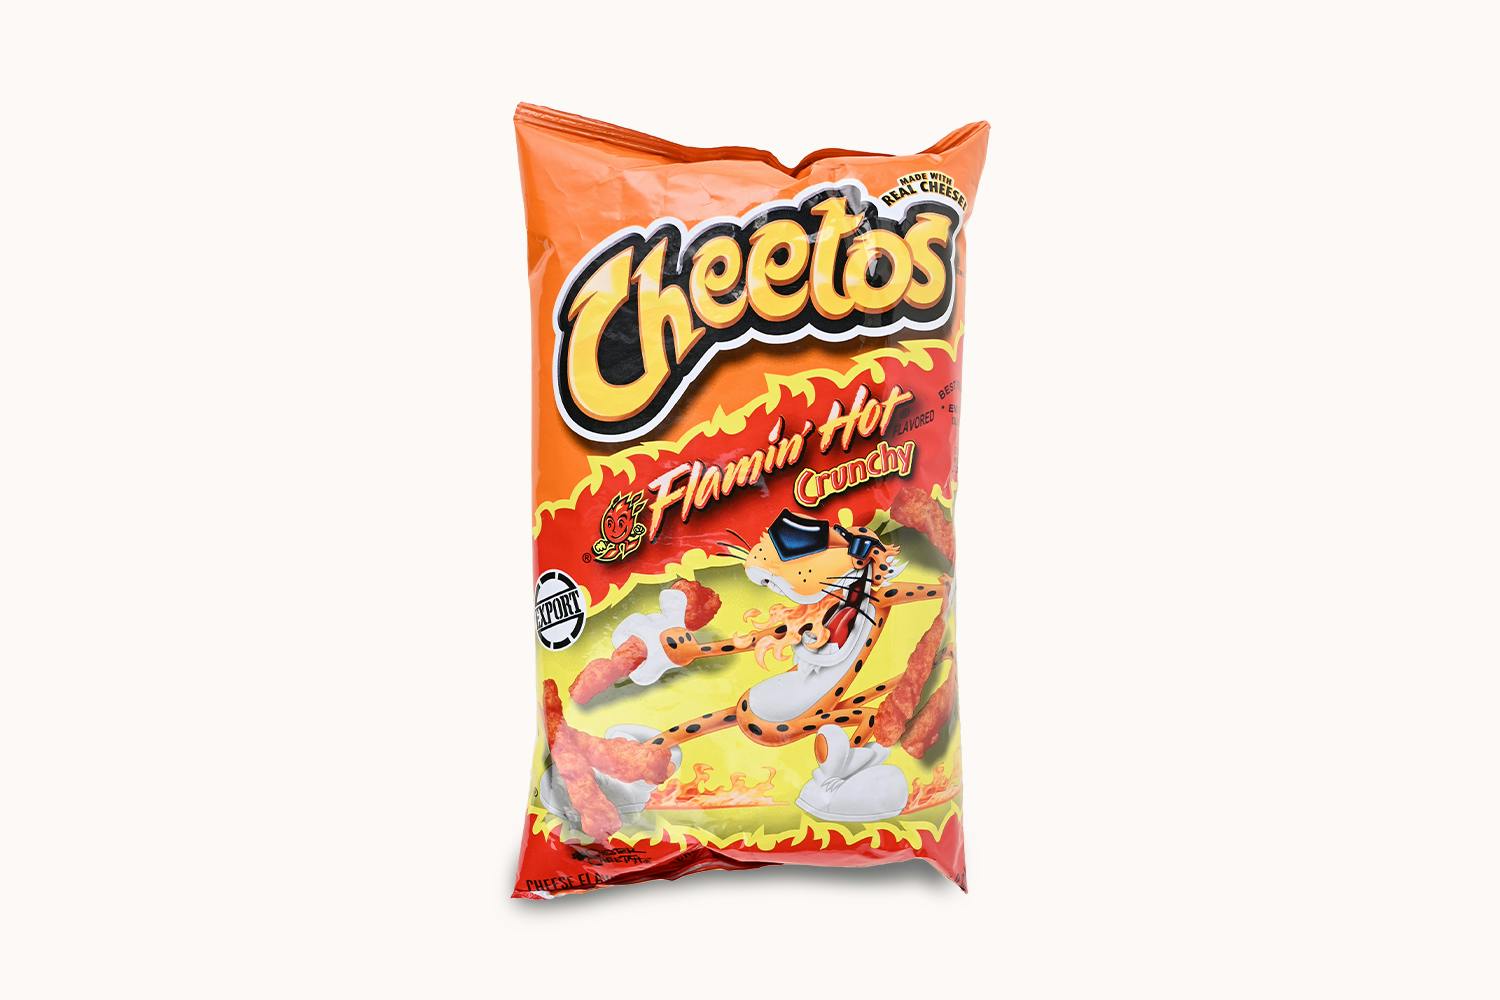 Cheetos Snack Flamin' Hot Crunchy